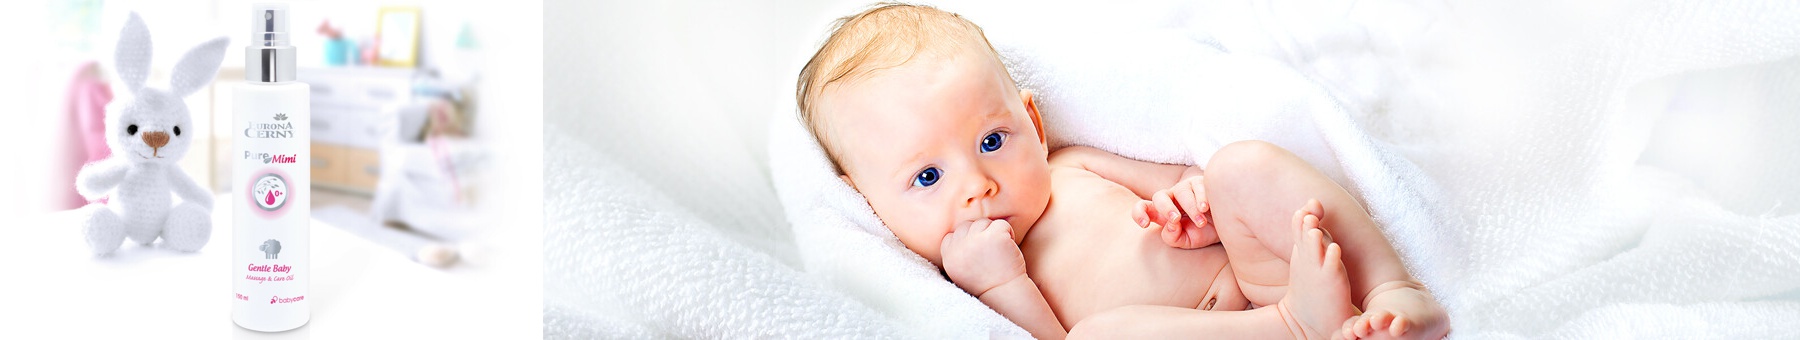 Eurona Cerny Pure Mimi Gentle Baby Massage Oil